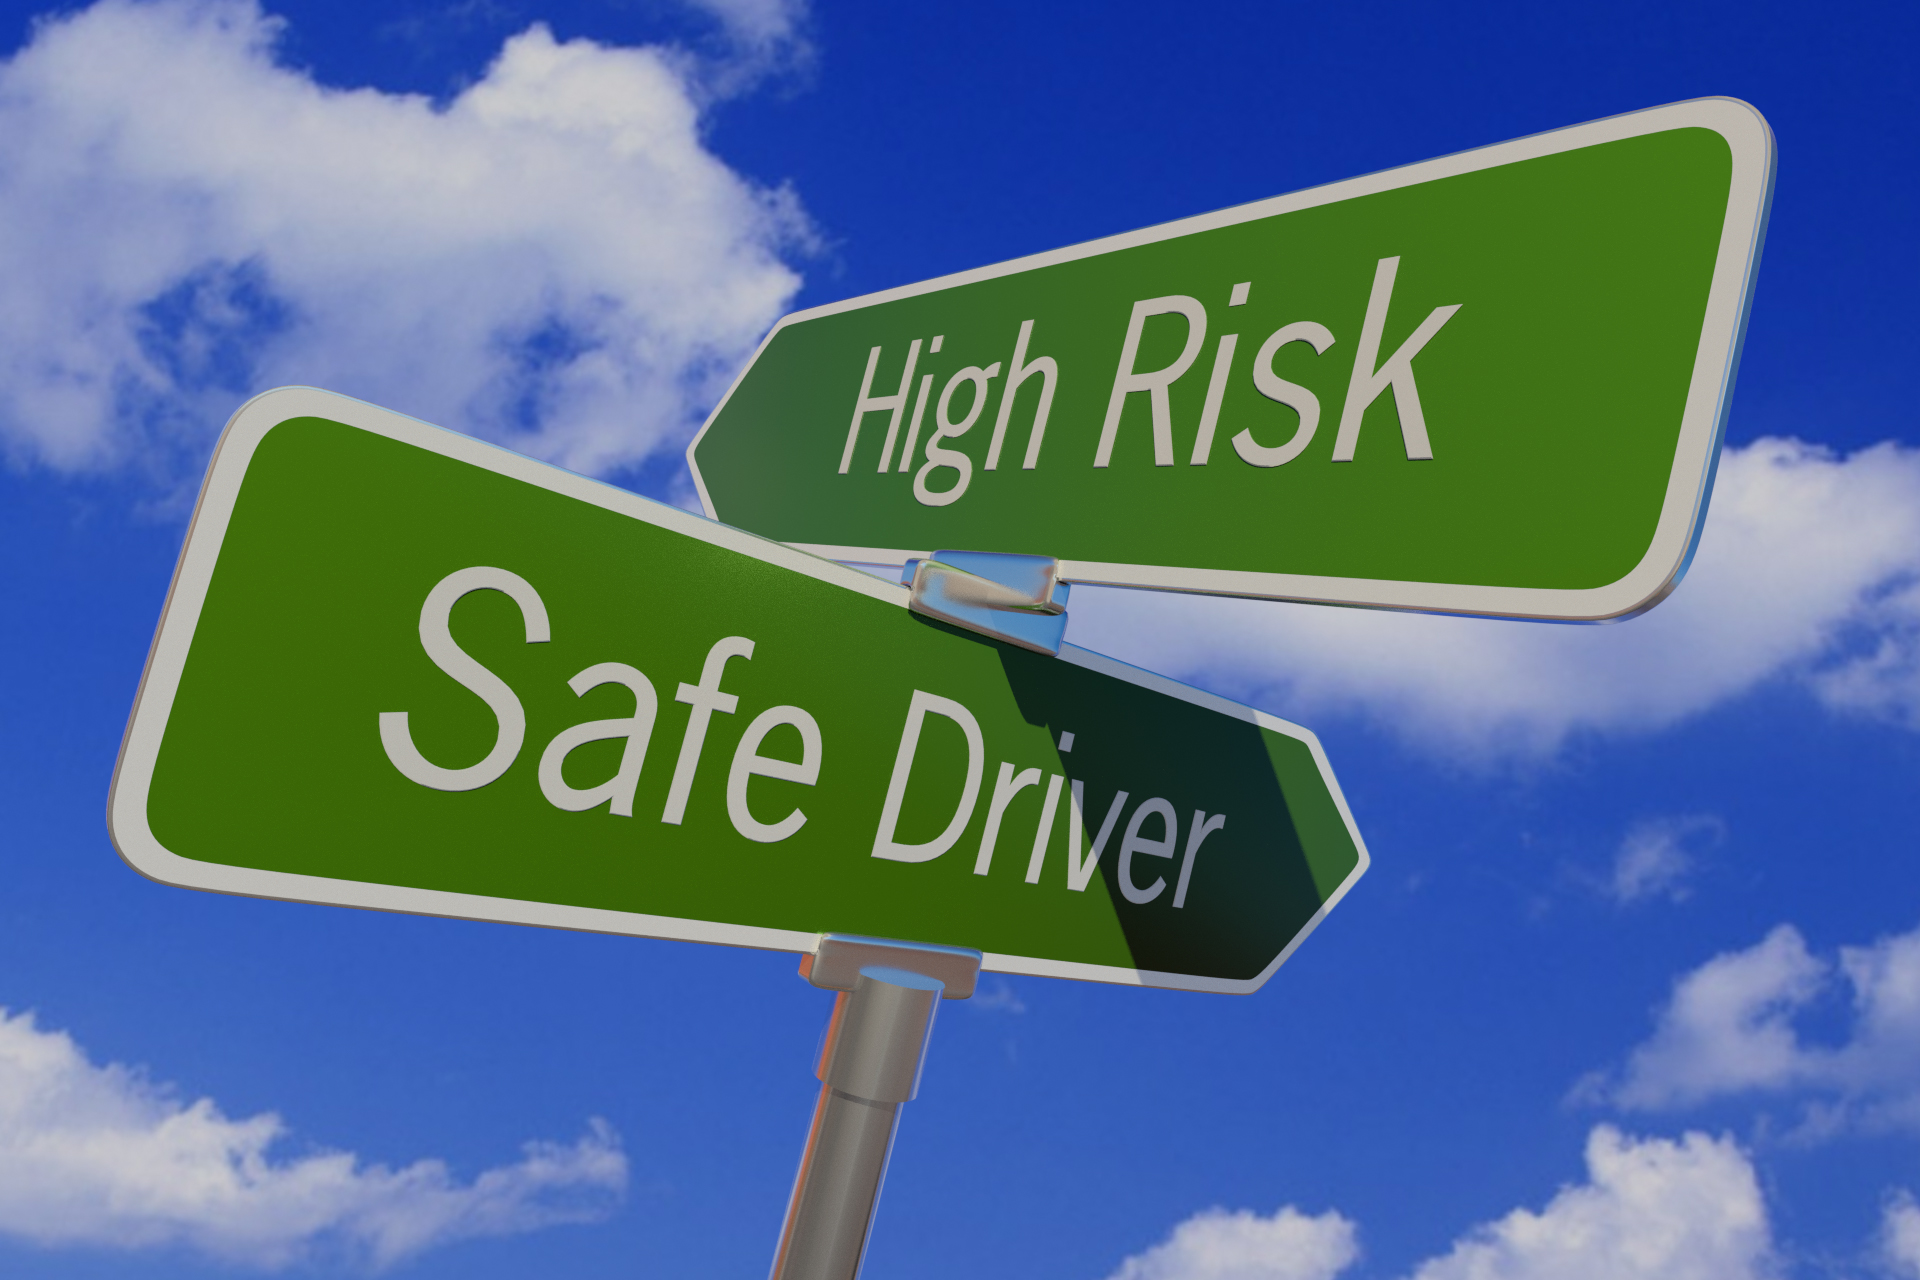 High risk driver street sign free image download